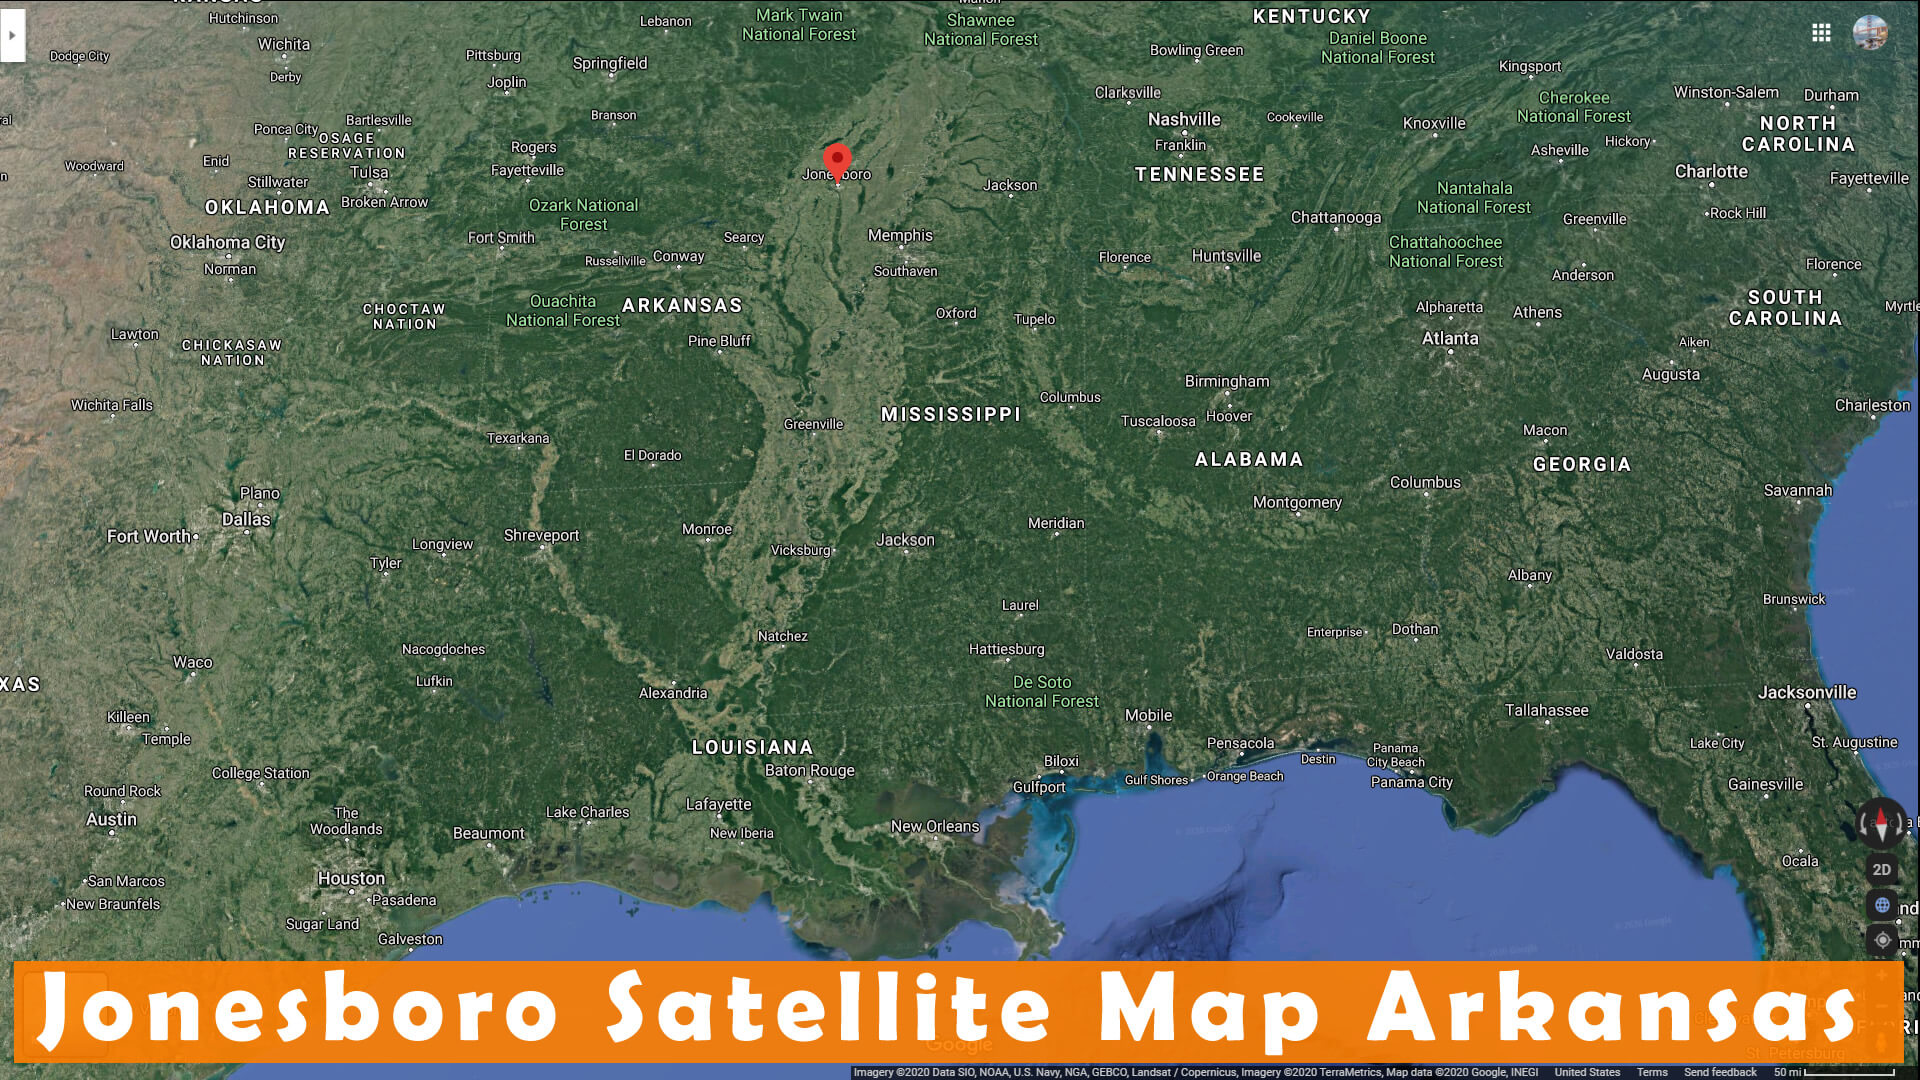 Jonesboro Satellite Map Arkansas